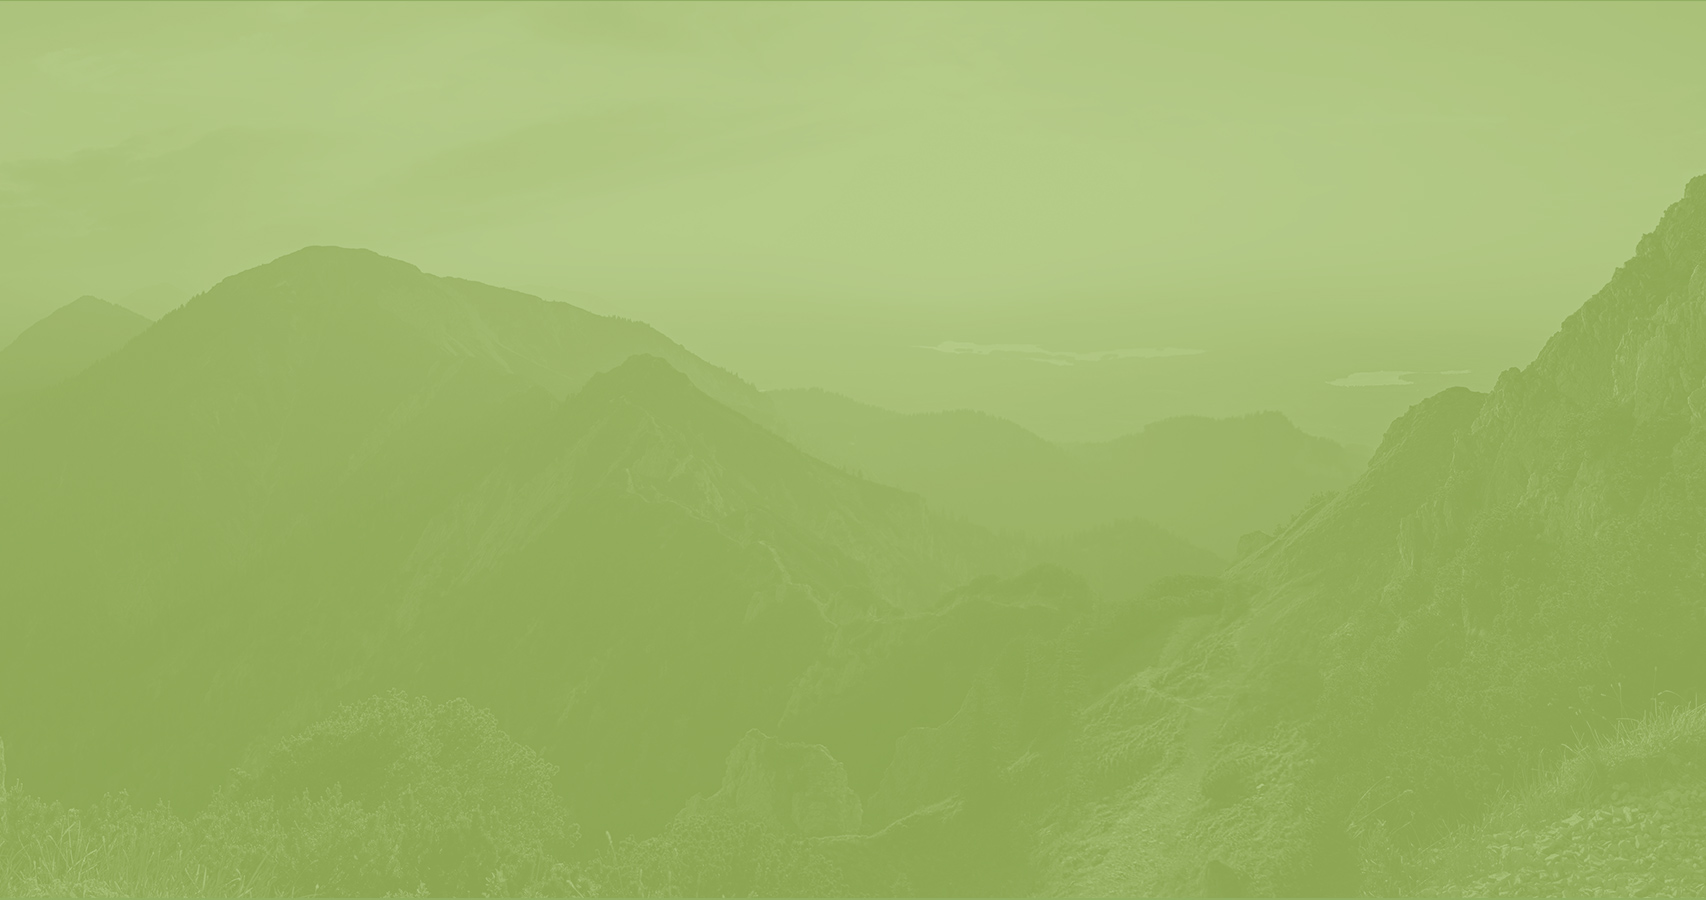 Green-tinted mountainous landscape